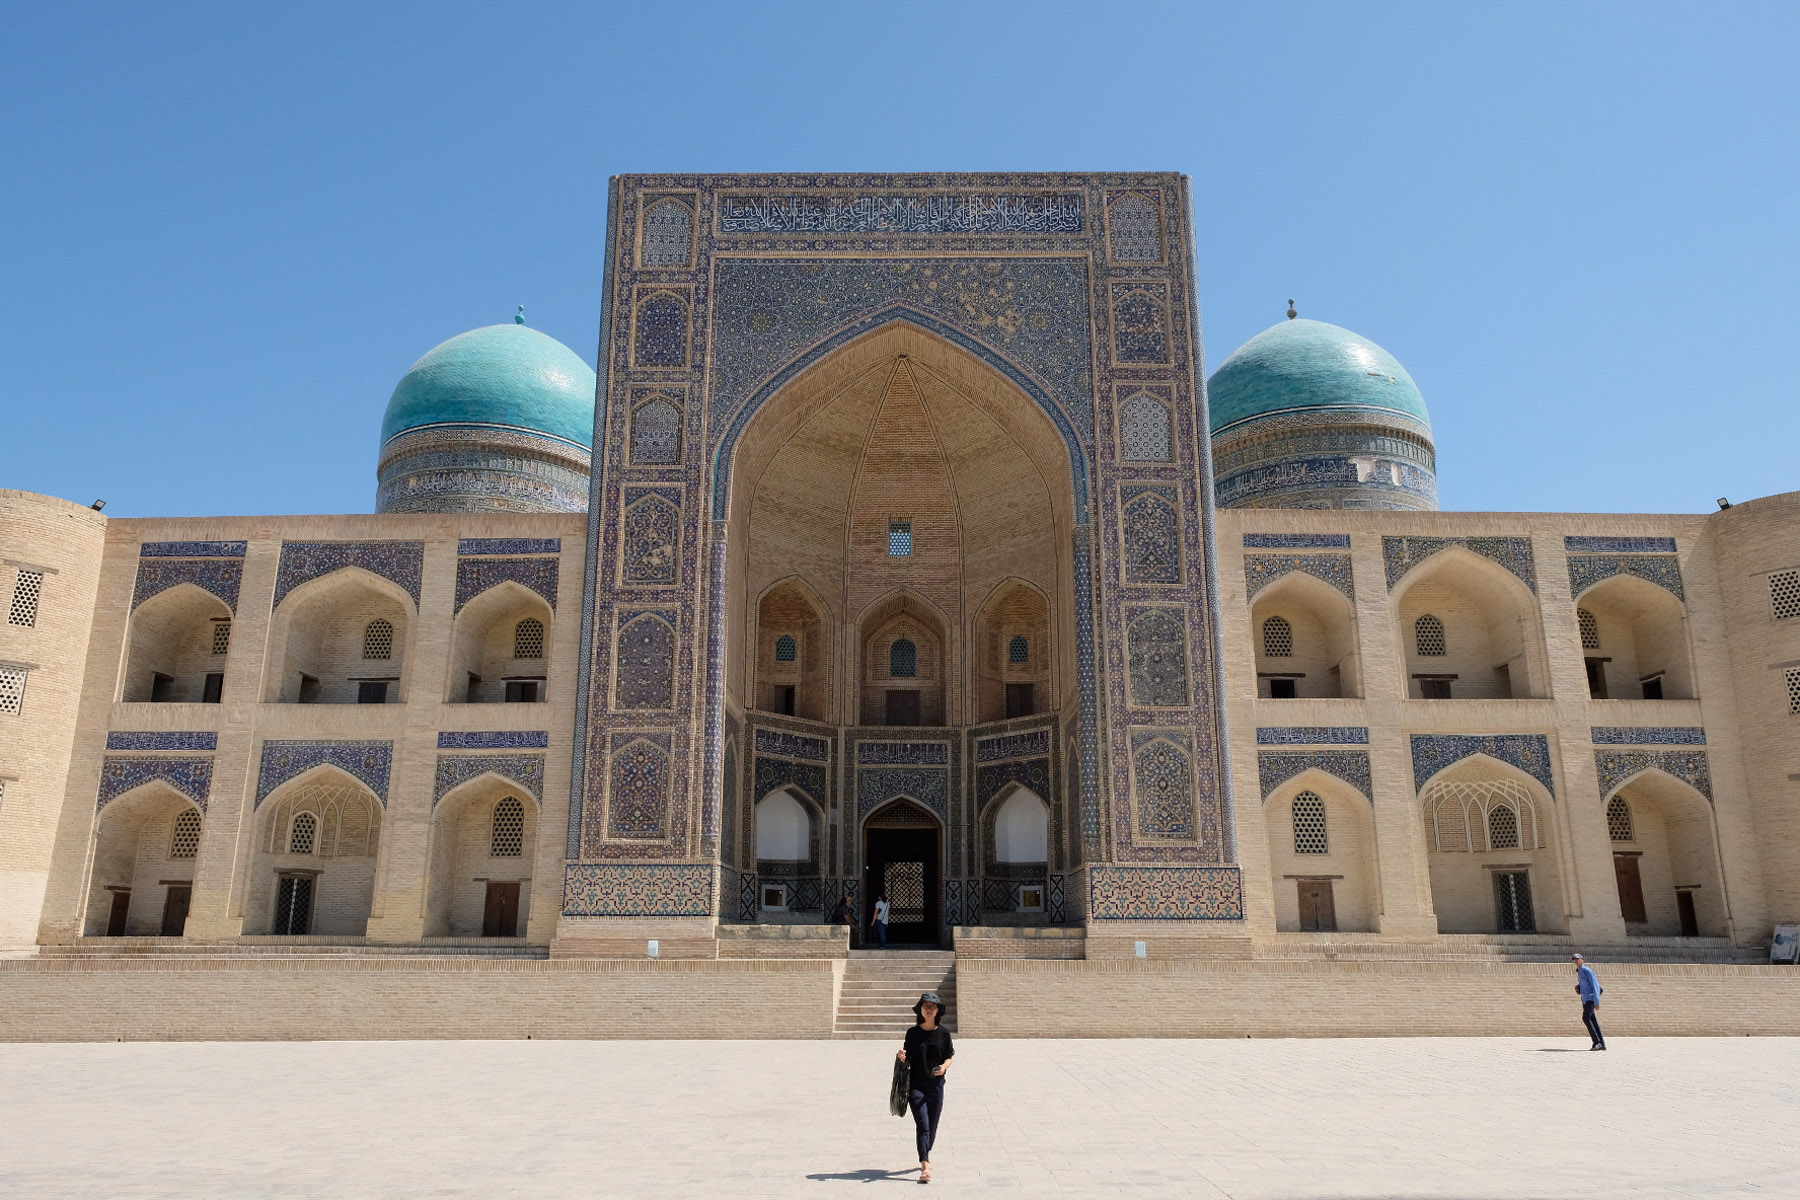 Beautiful mosaic architecture in Uzbekistan